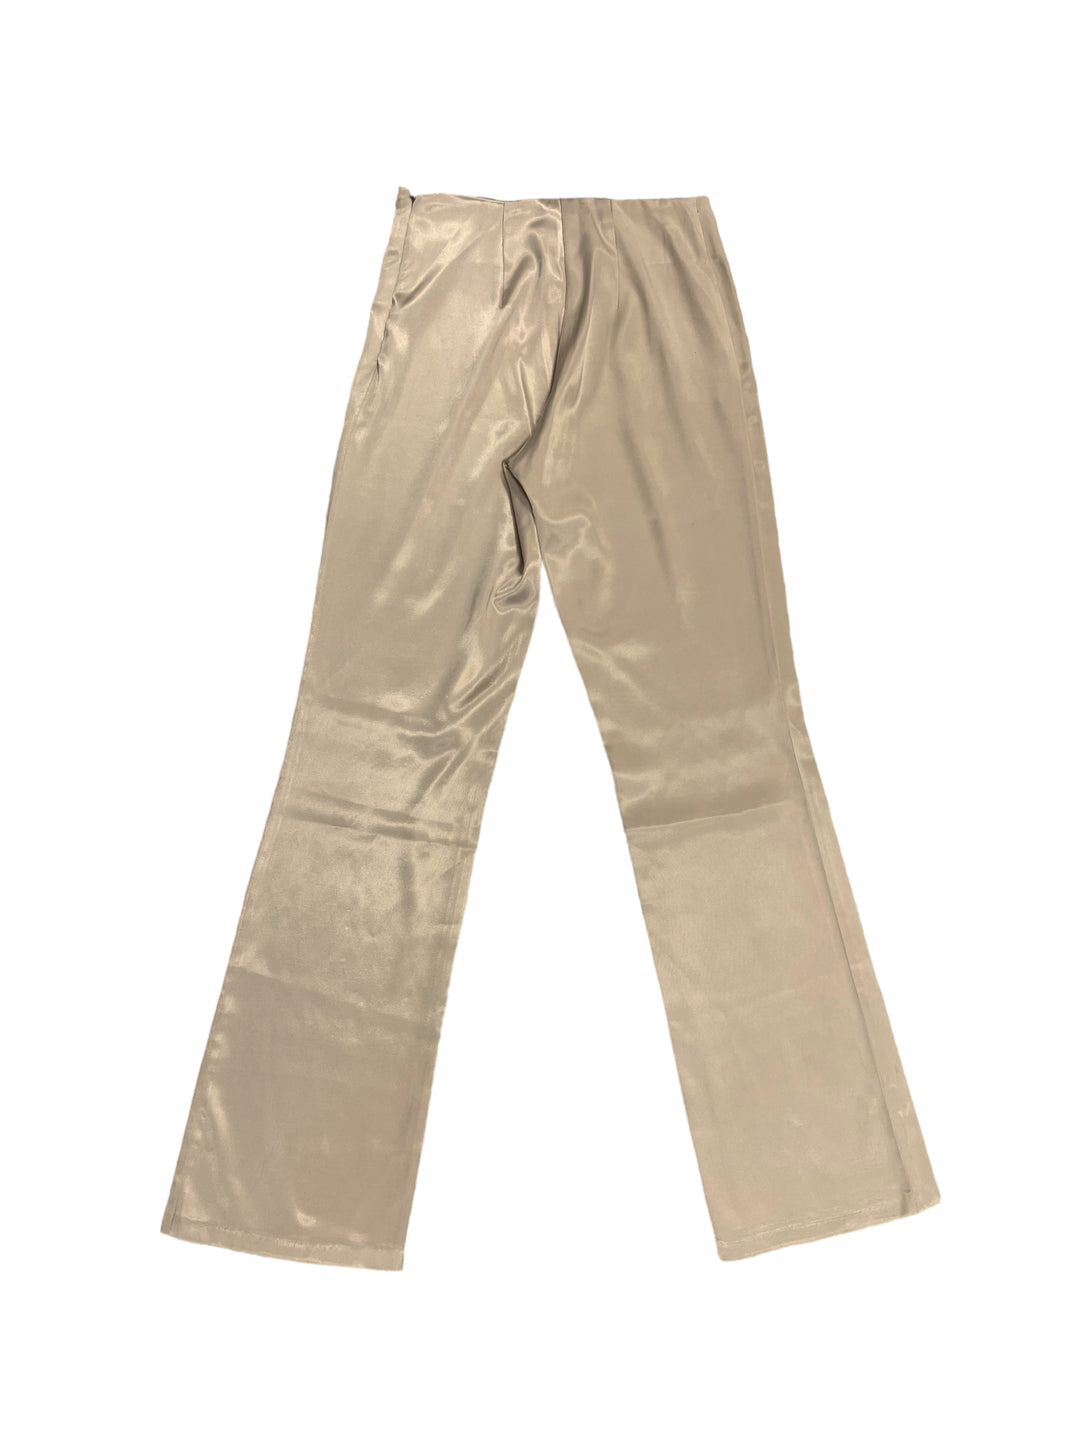 Vintage Gold Shiny Pants Women’s Small(34)